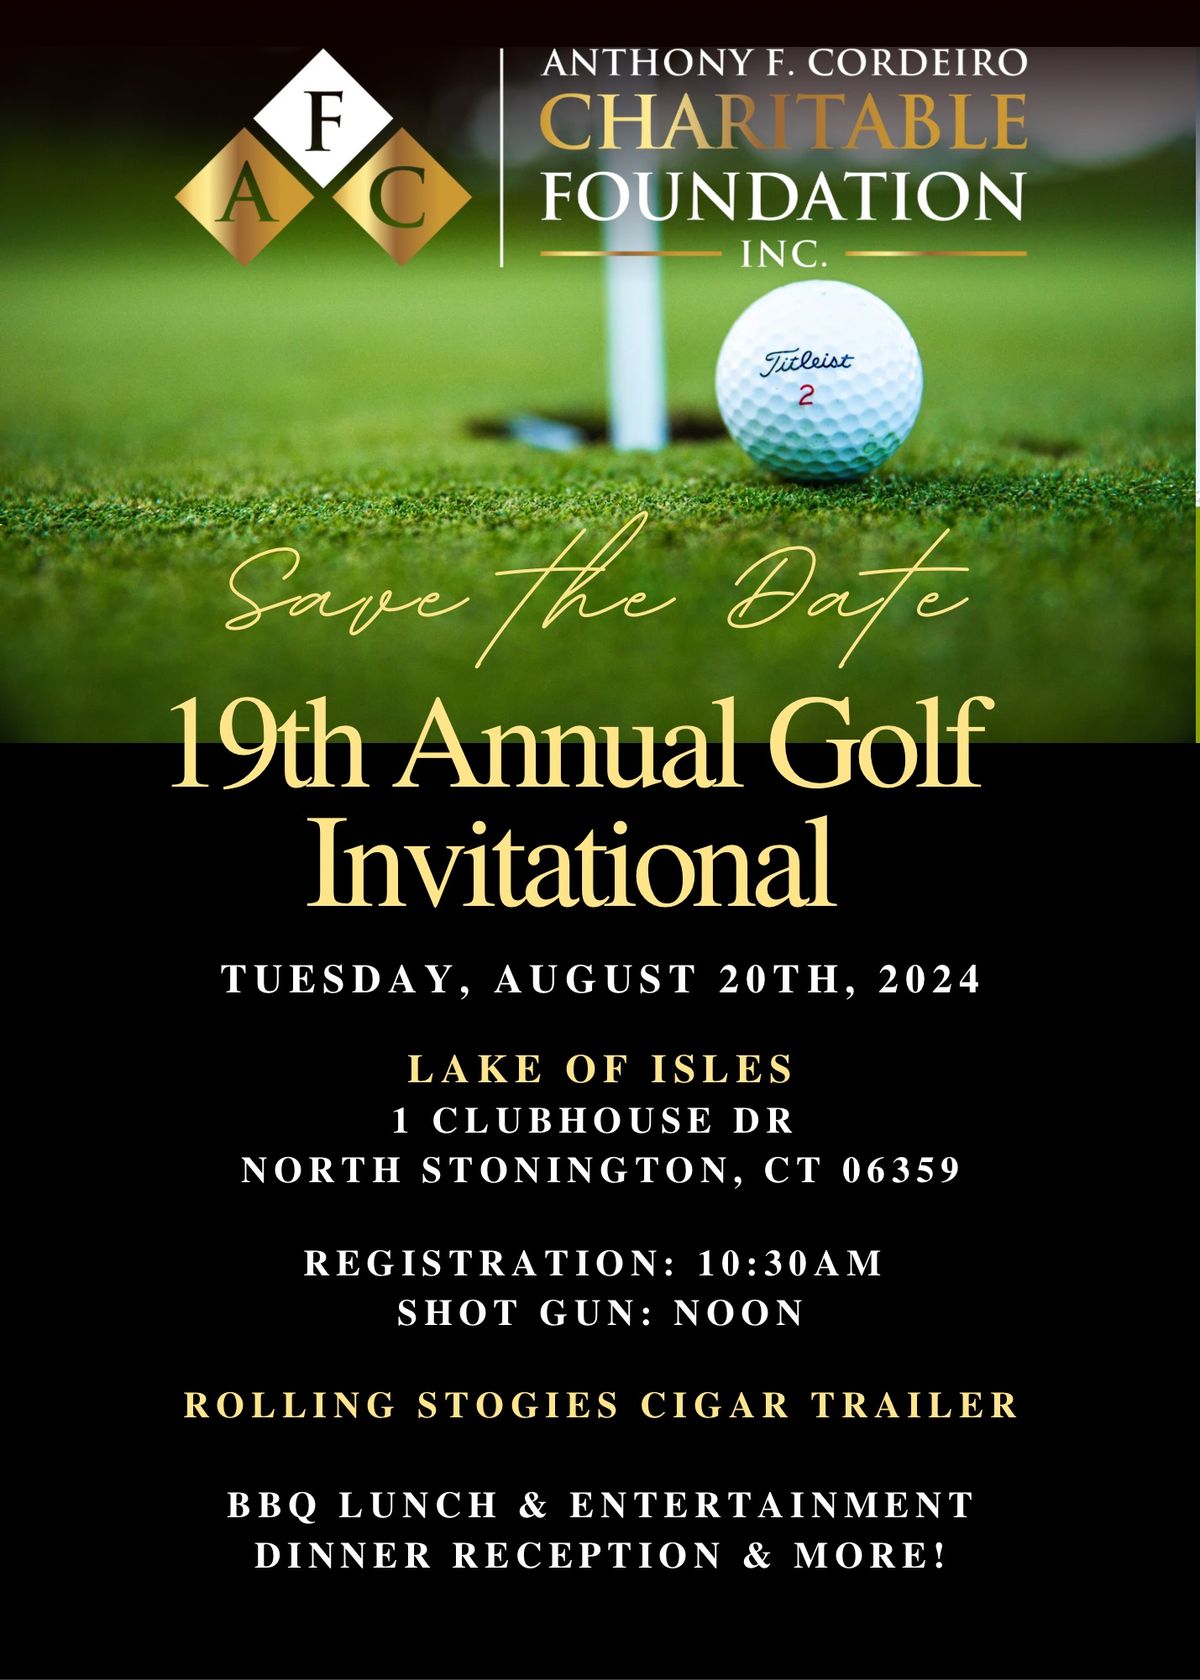 The 19th Annual Golf Invitational 